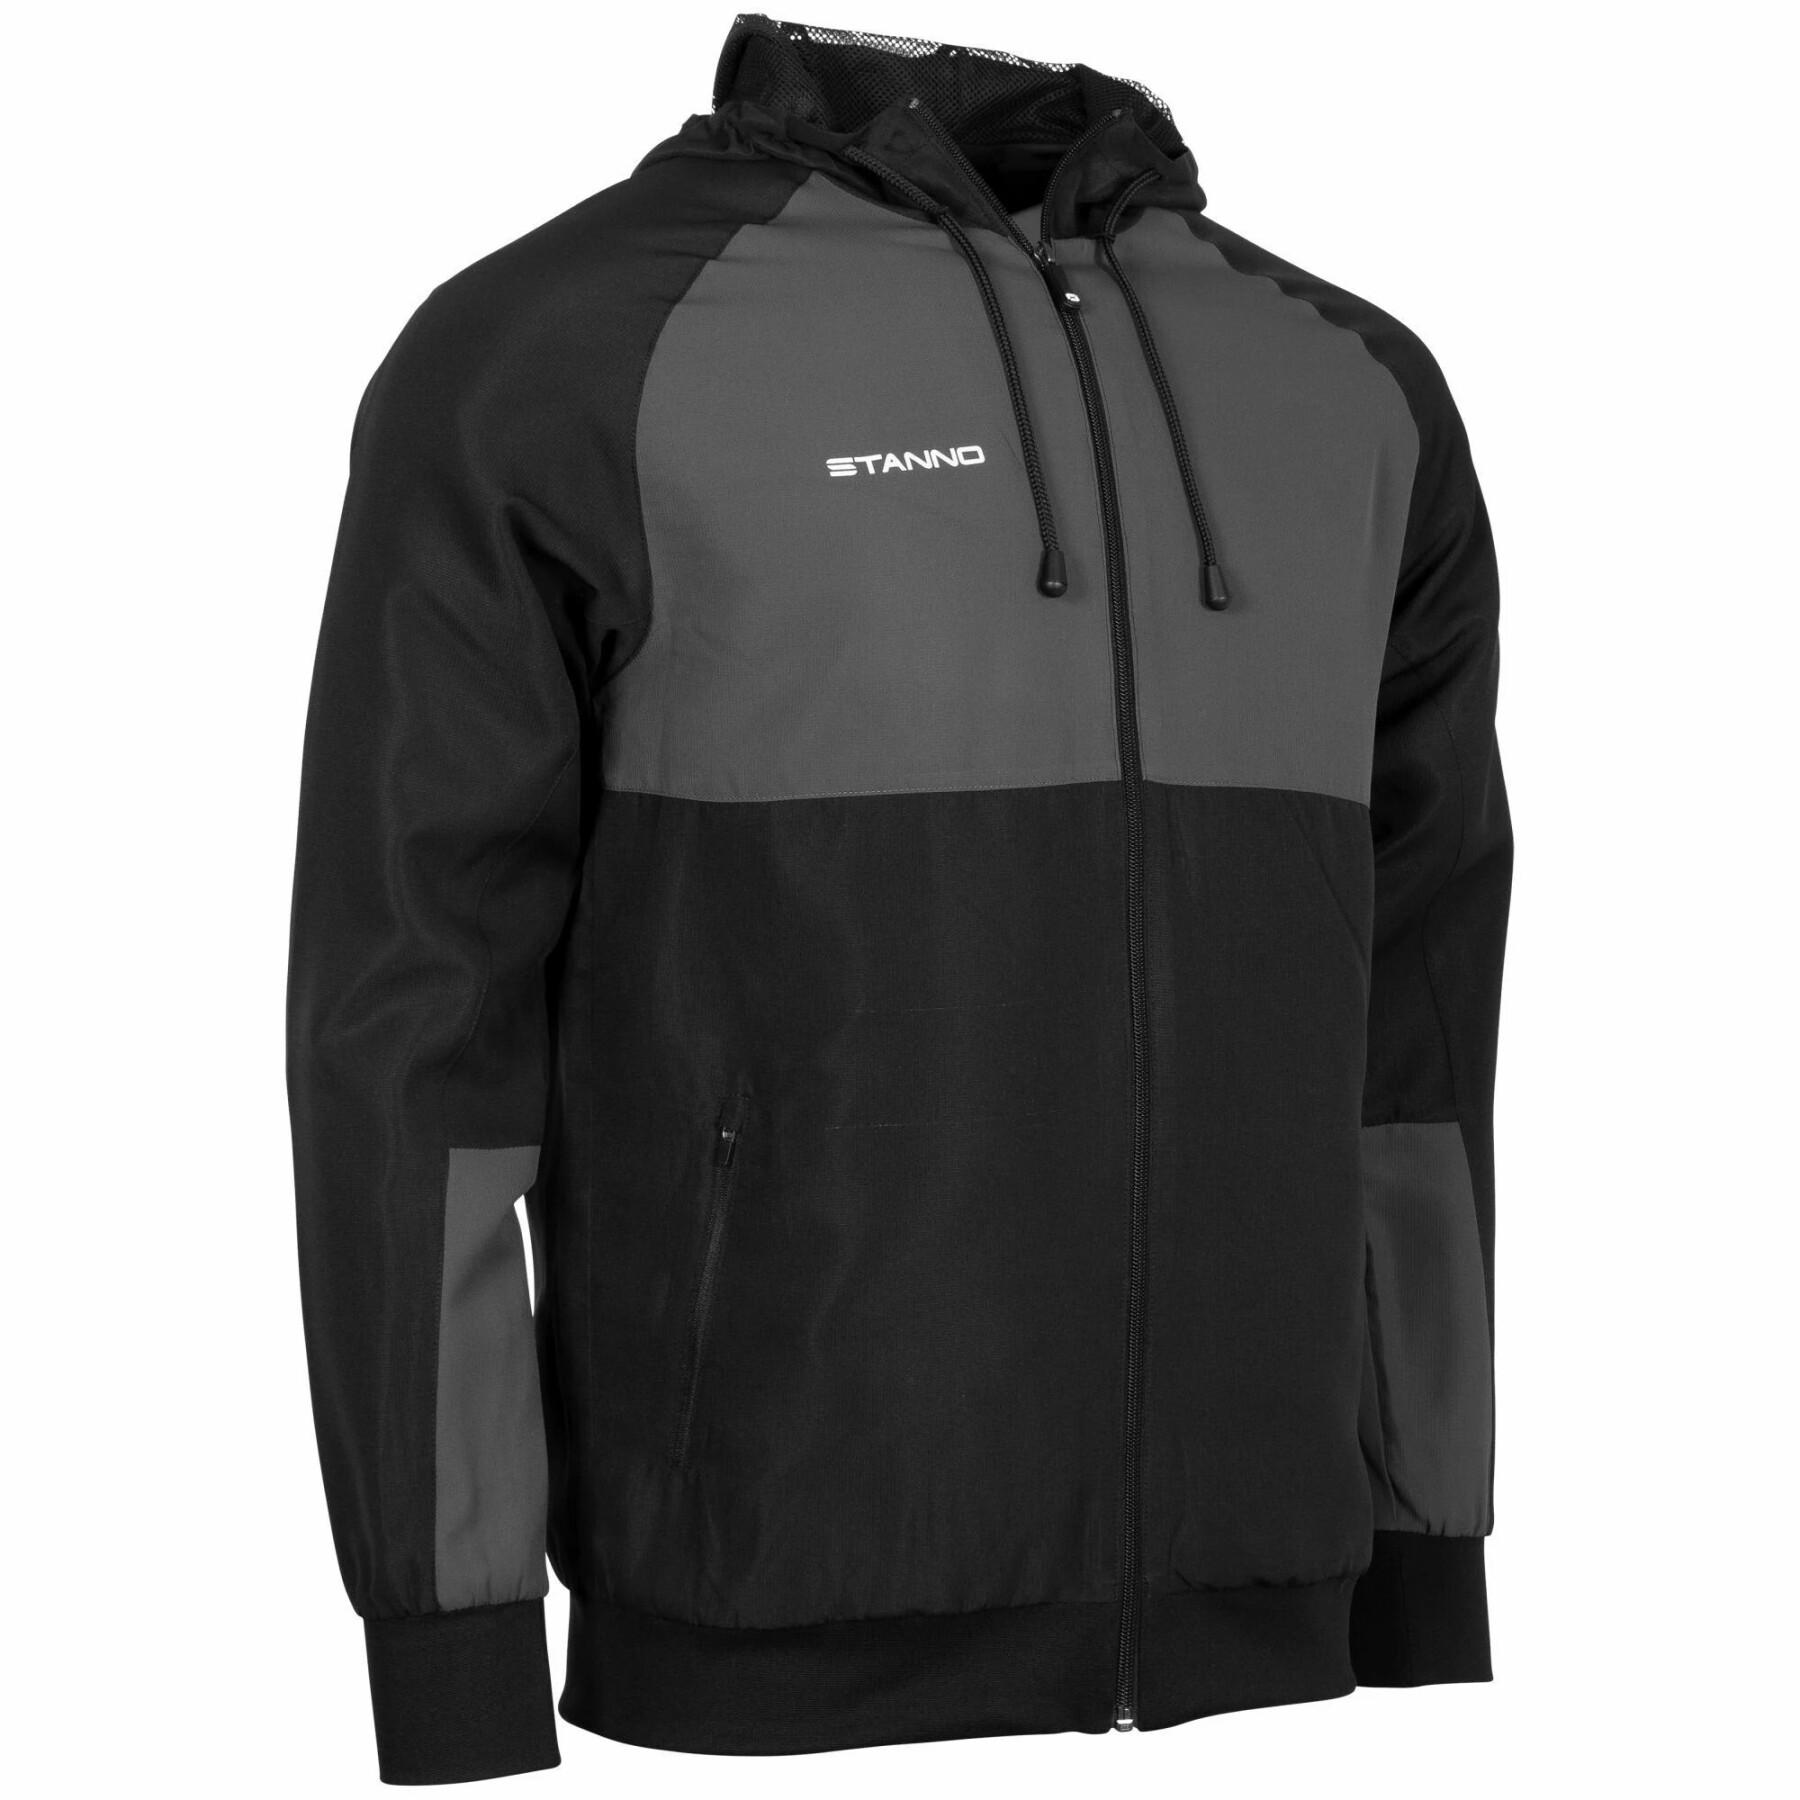 Waterproof jacket Stanno Centro Micro